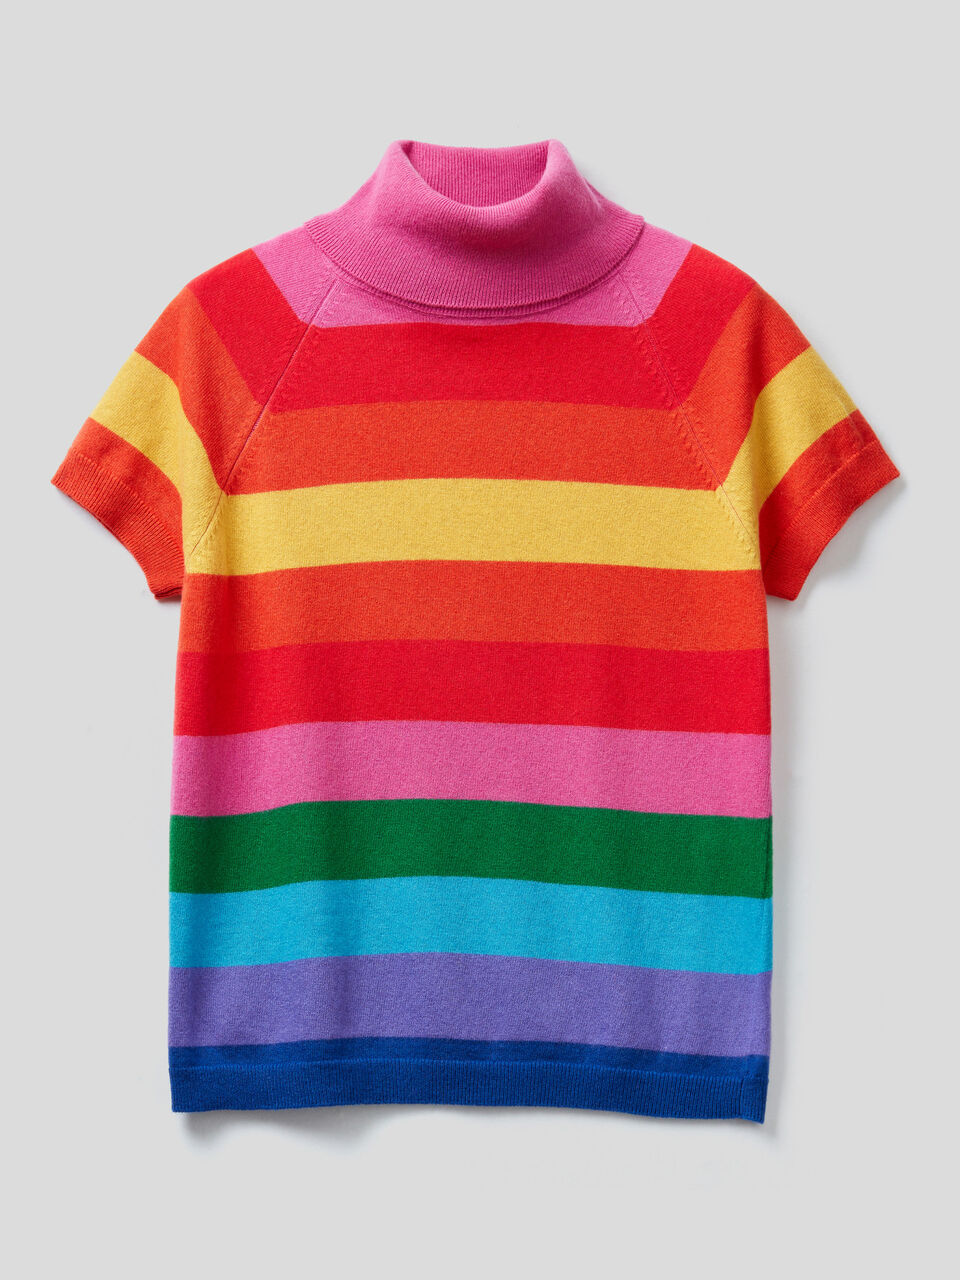 Volkmi 1 Knitted Colorblock Rainbow Heart Print Half Turtleneck Sweater  Slim Fit Net Red Long Sleeve Sweater Green L 